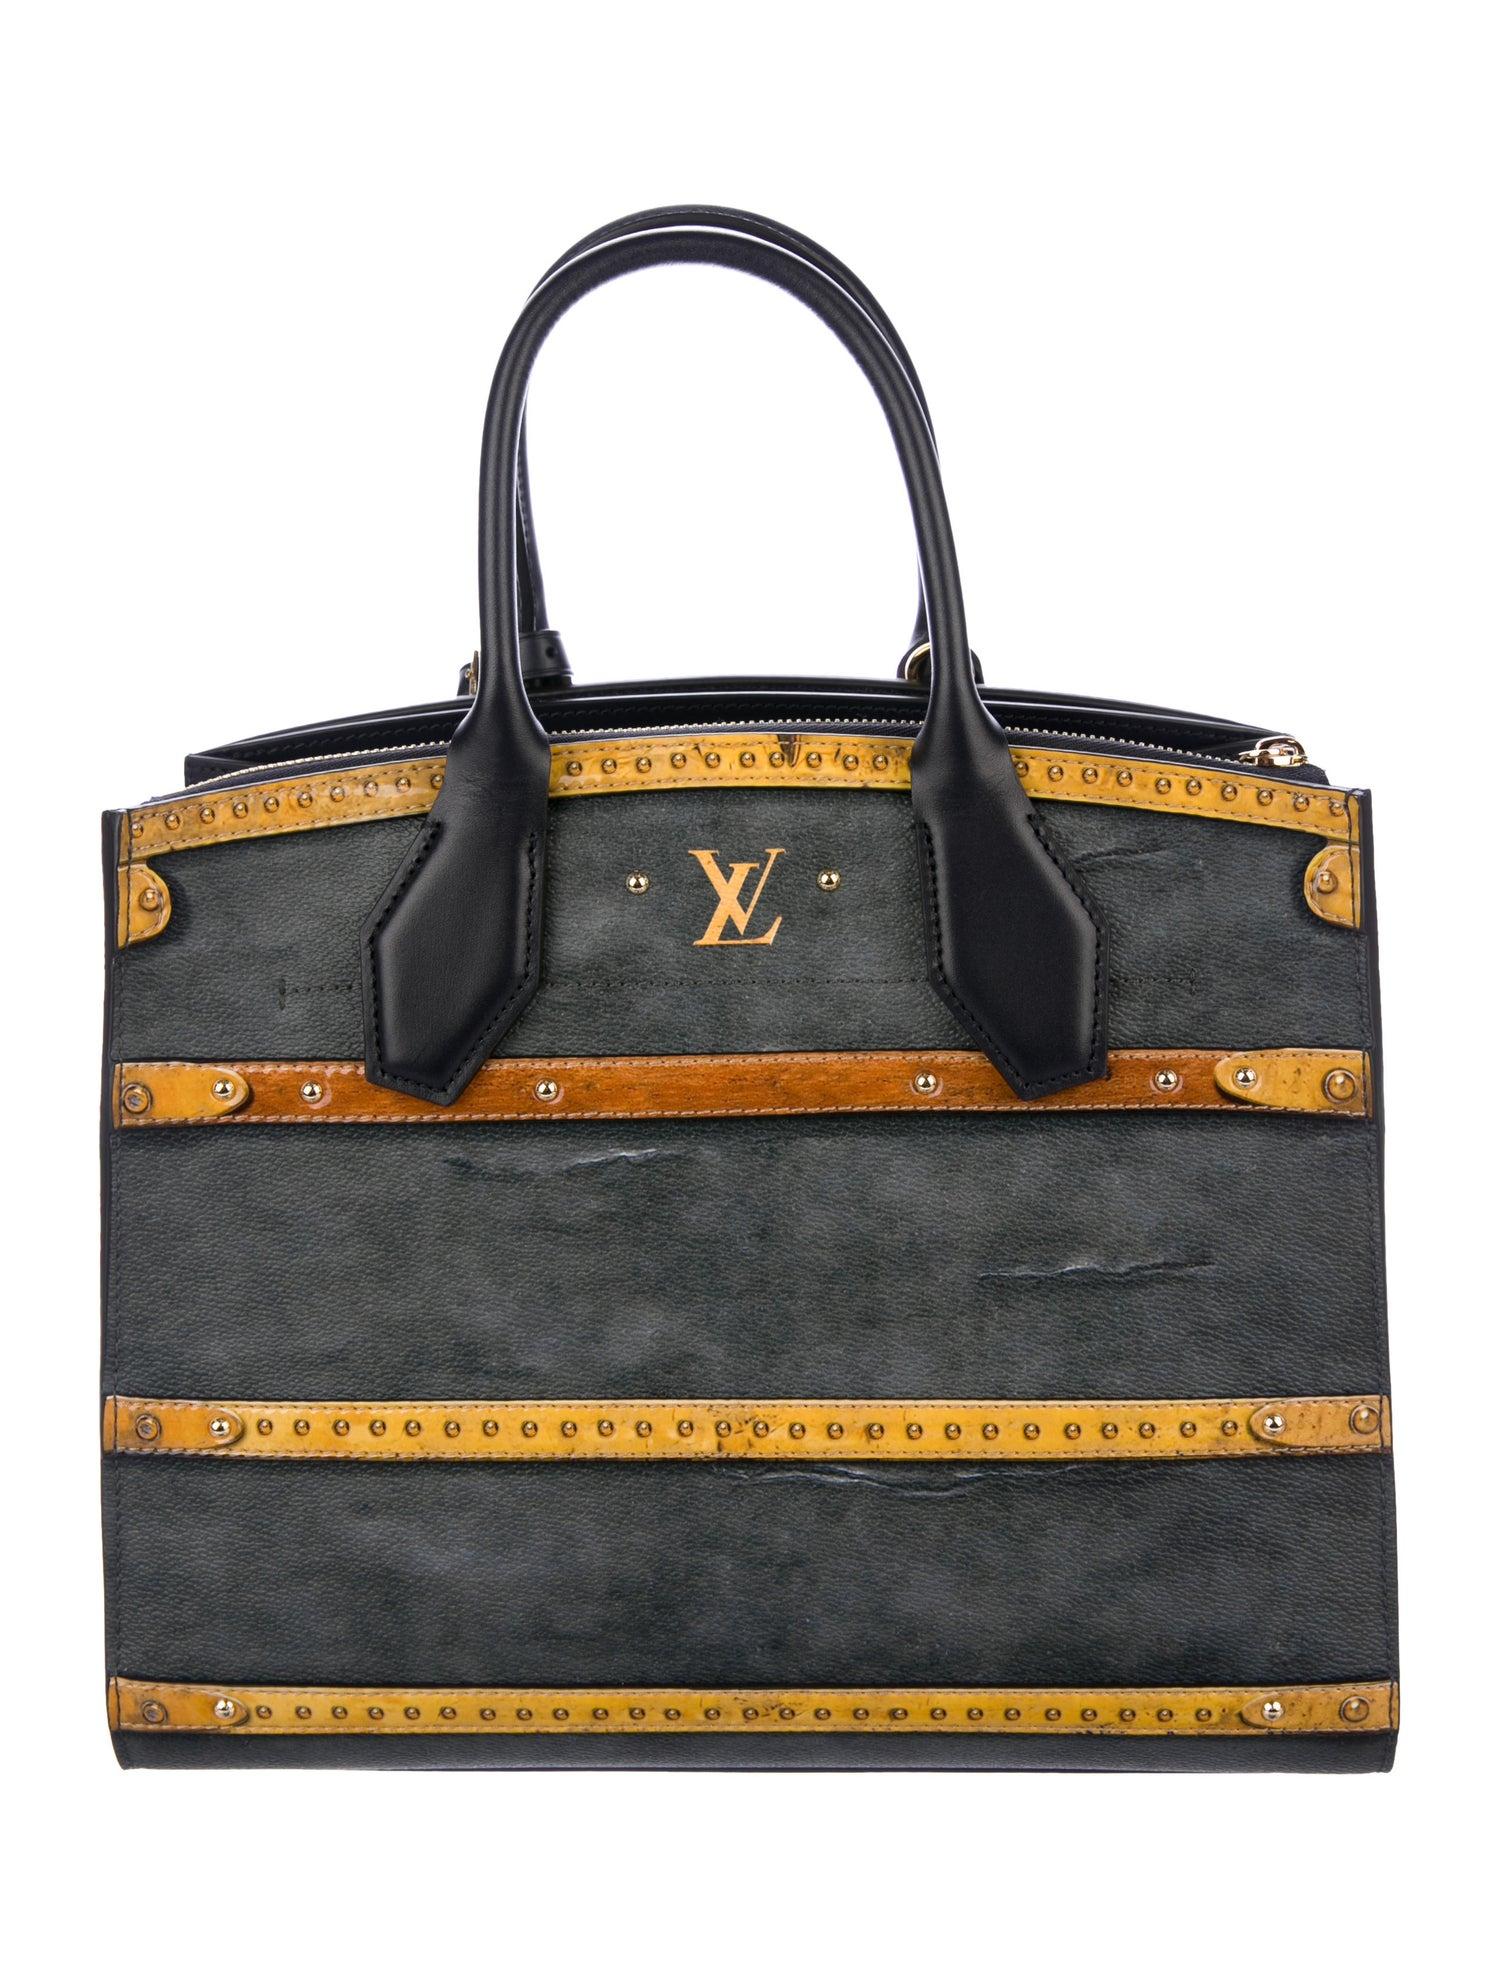 Women's Louis Vuitton NEW Limited Edition Gray Top Handle Satchel Shoulder Bag in Box